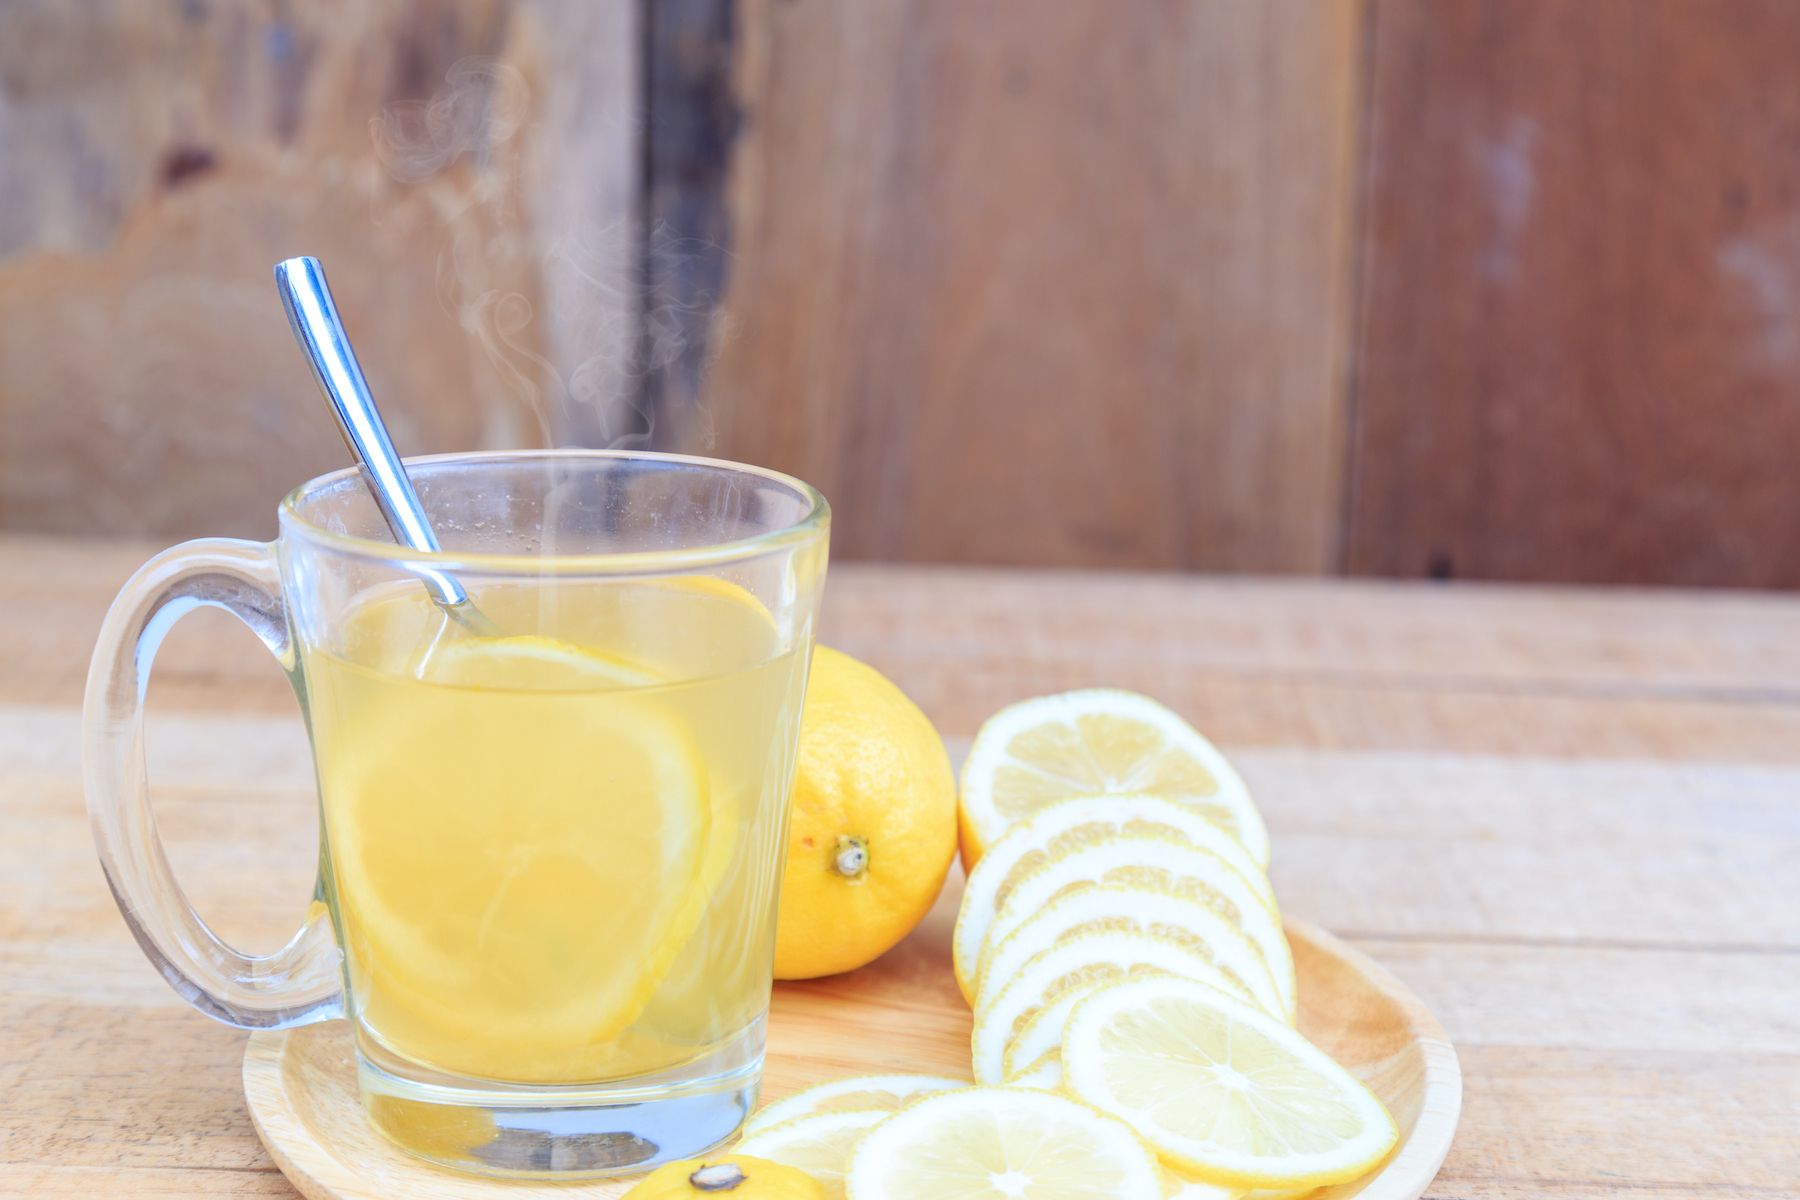 Cup of lemon water on a plate of sliced lemons